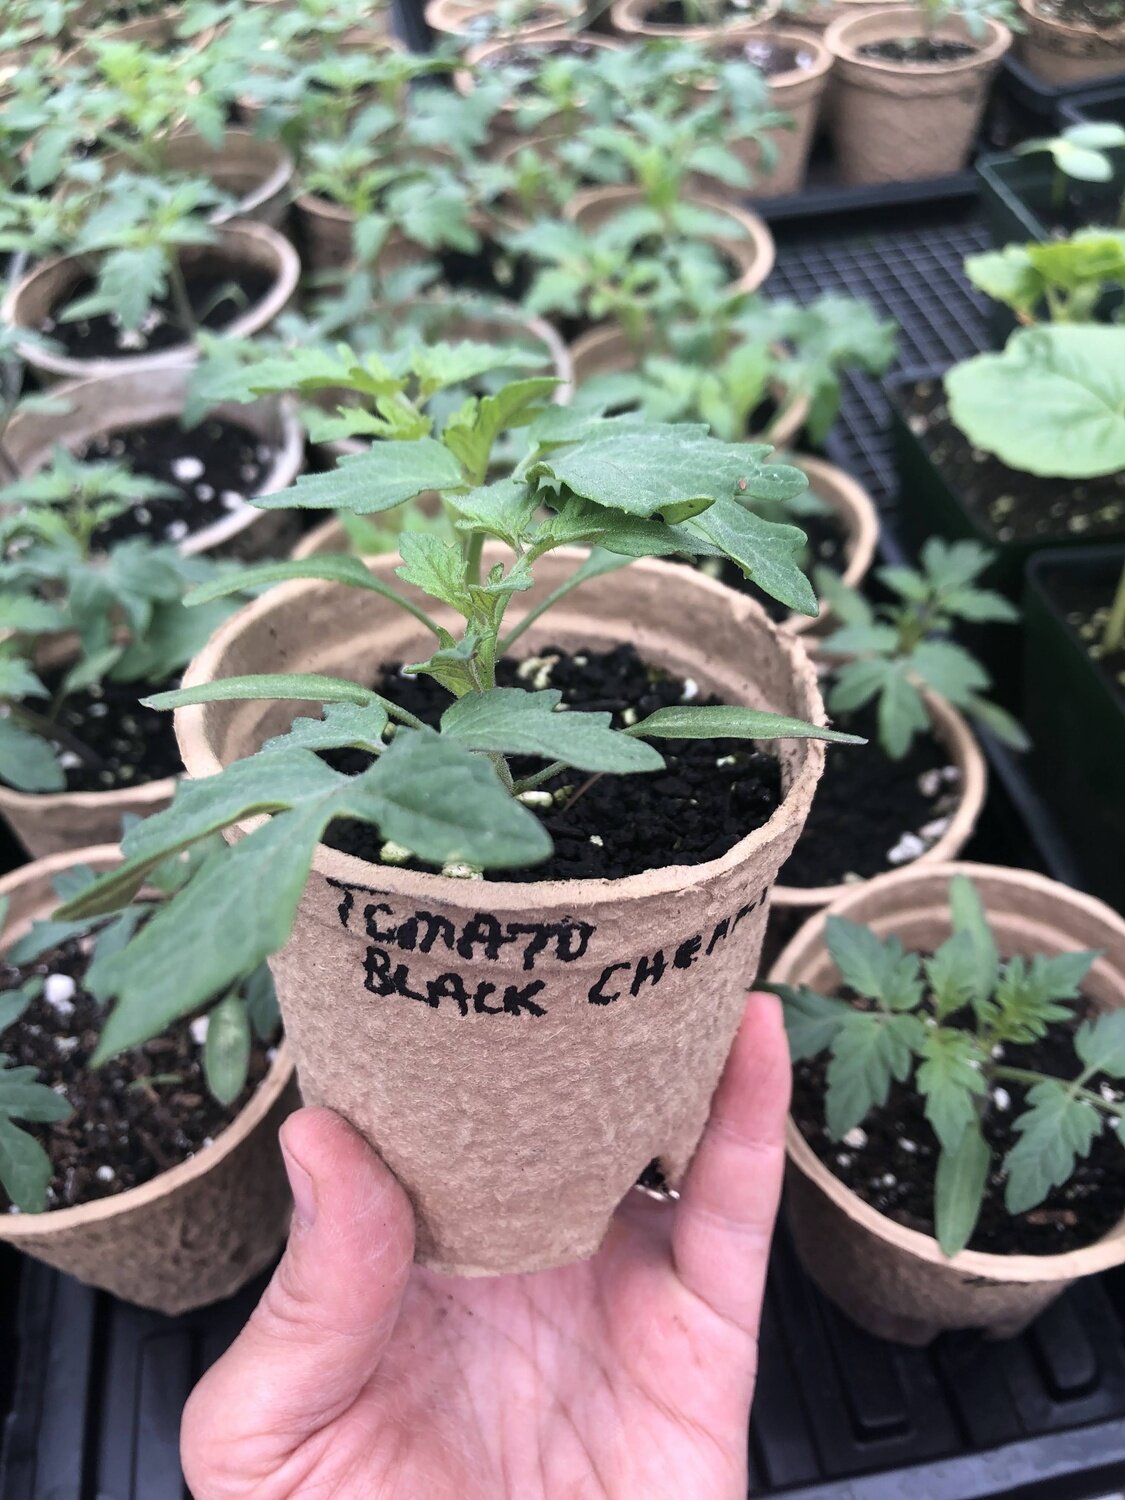 Cherry tomato - var.: black cherry (2 plants per pot)